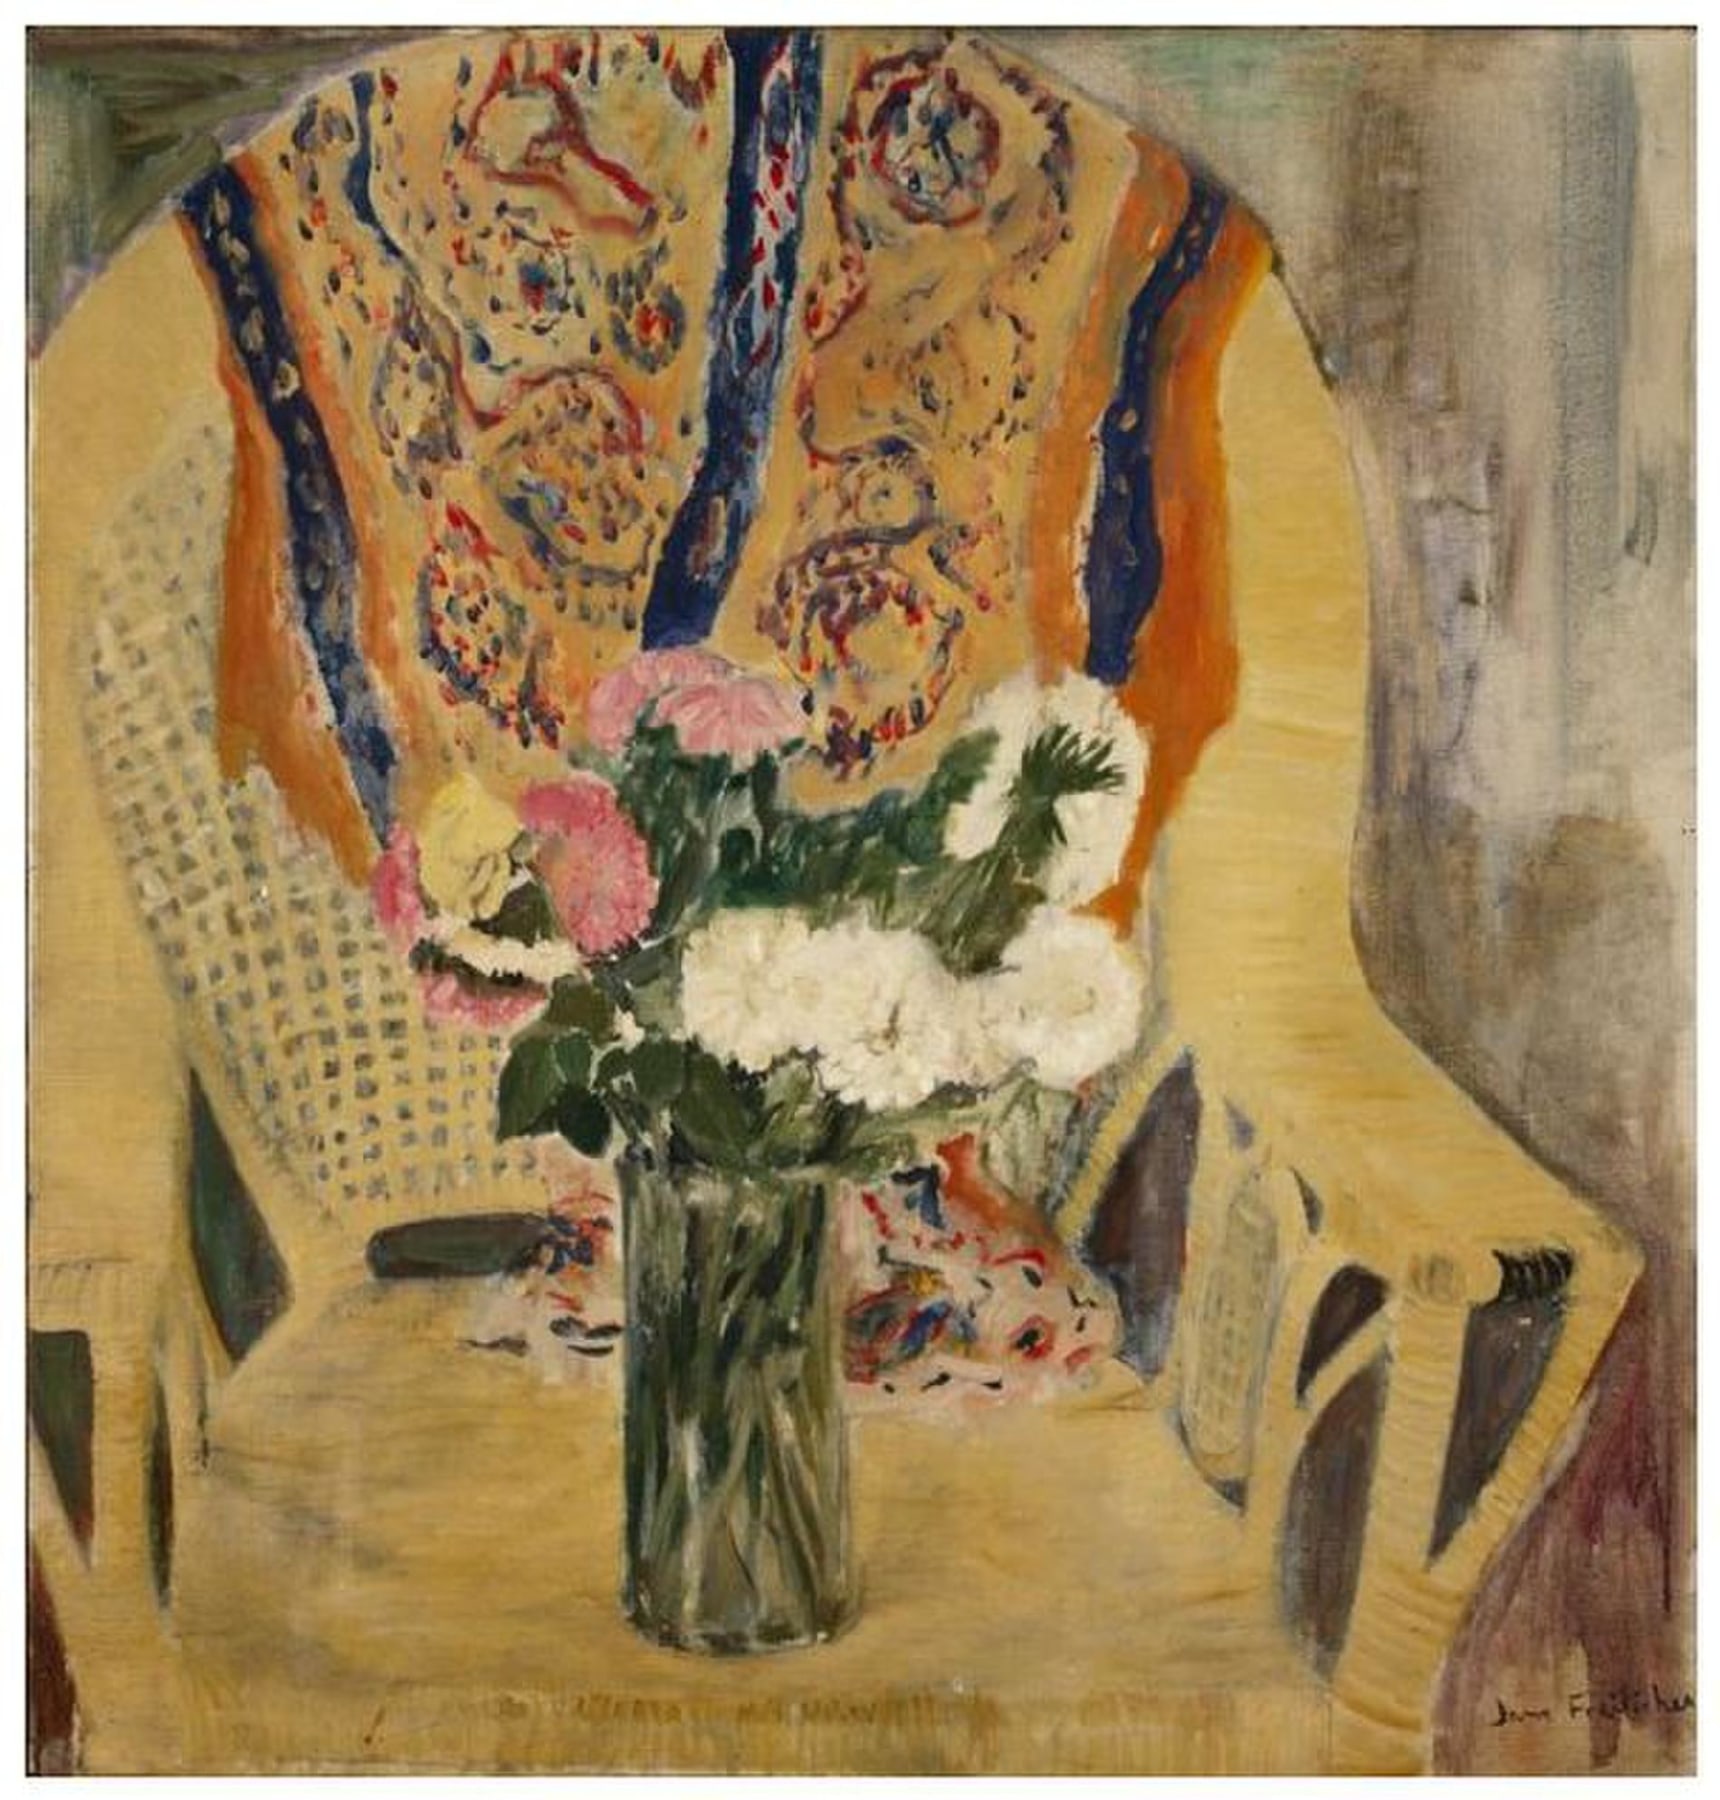 Image of JANE FREILICHER's Flowers in Armchair, 1956